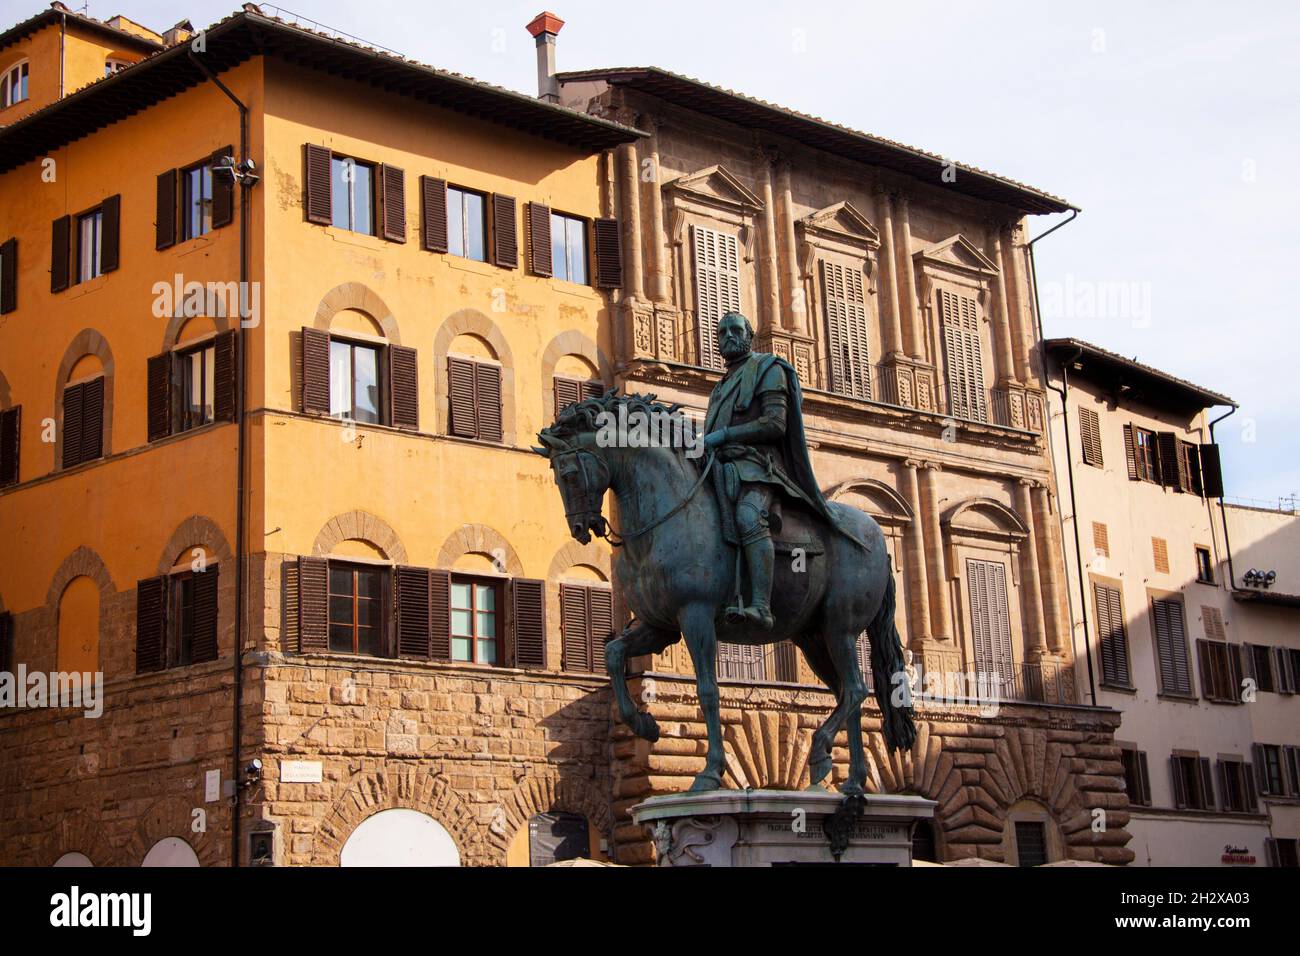 Statue of Cosimo I de Medici on horseback, Grand Duke of Tuscany, on Piazza della Signoria, Florence, Tuscany, Italy, Europe. Stock Photo